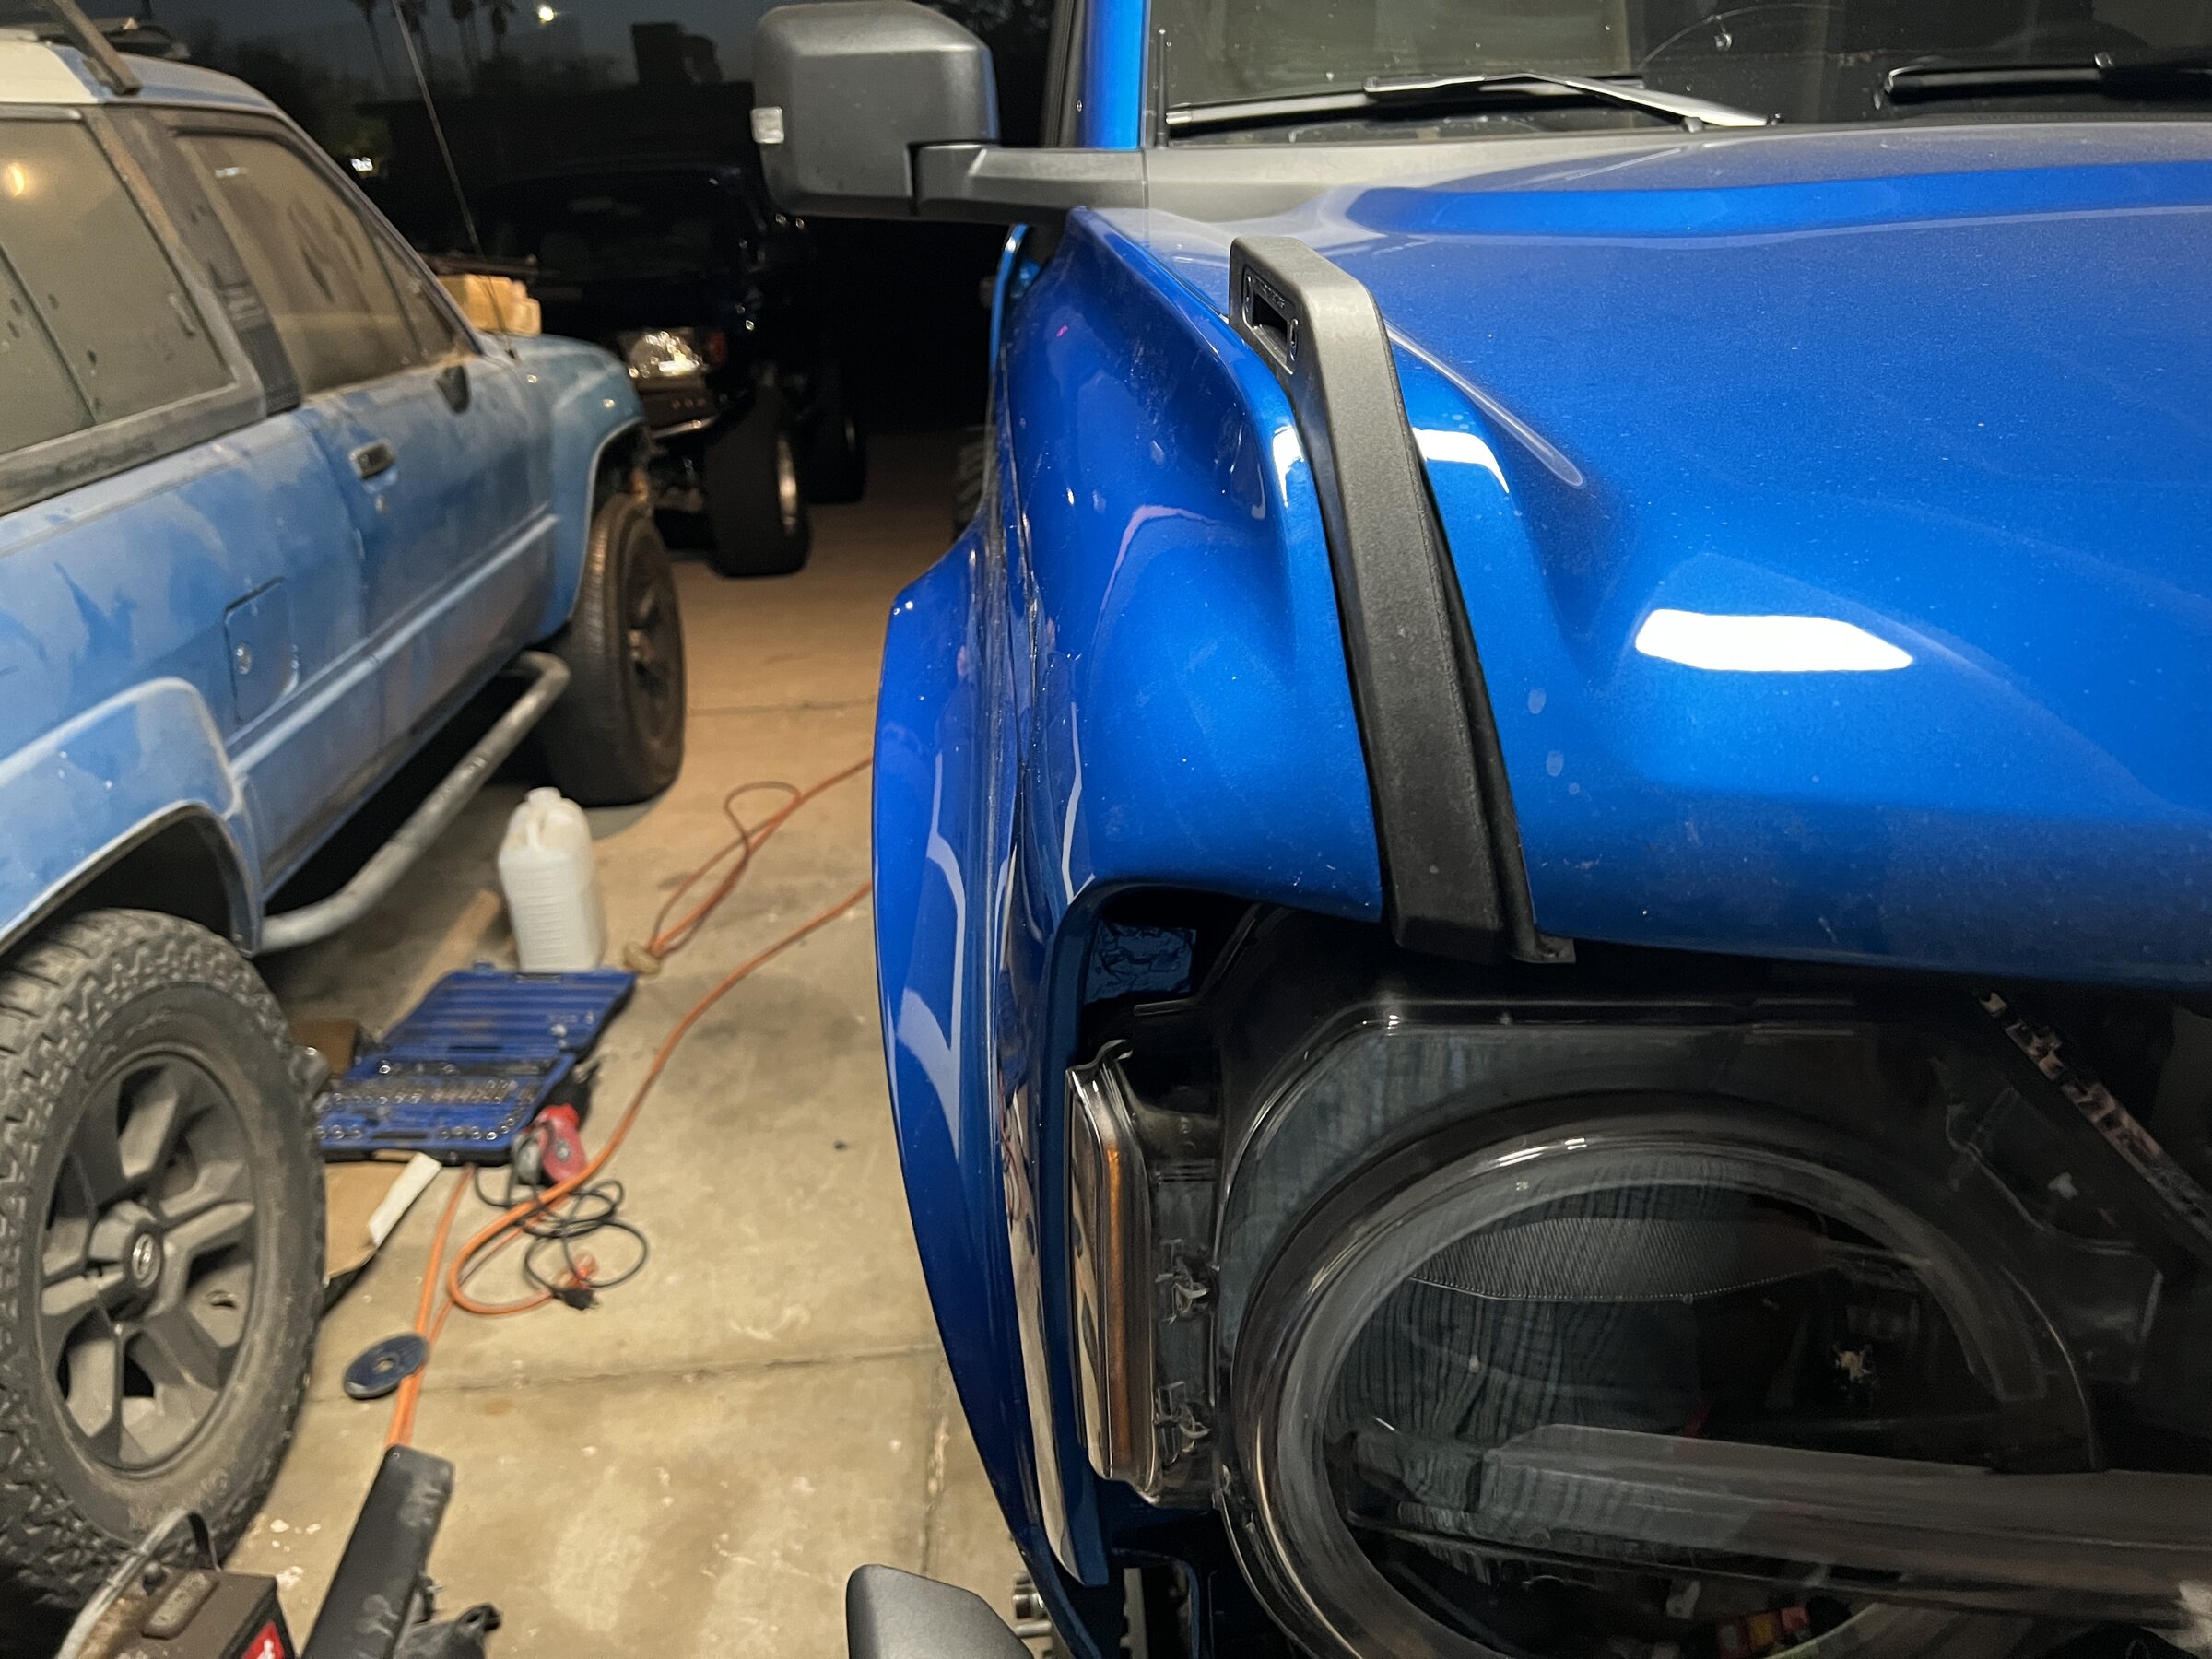 Ford Bronco Rockdawg84's Badsquach 21 Adventure and Build Thread "Wild Blue" B90B22EB-41E2-452B-A640-F0A340156EB7